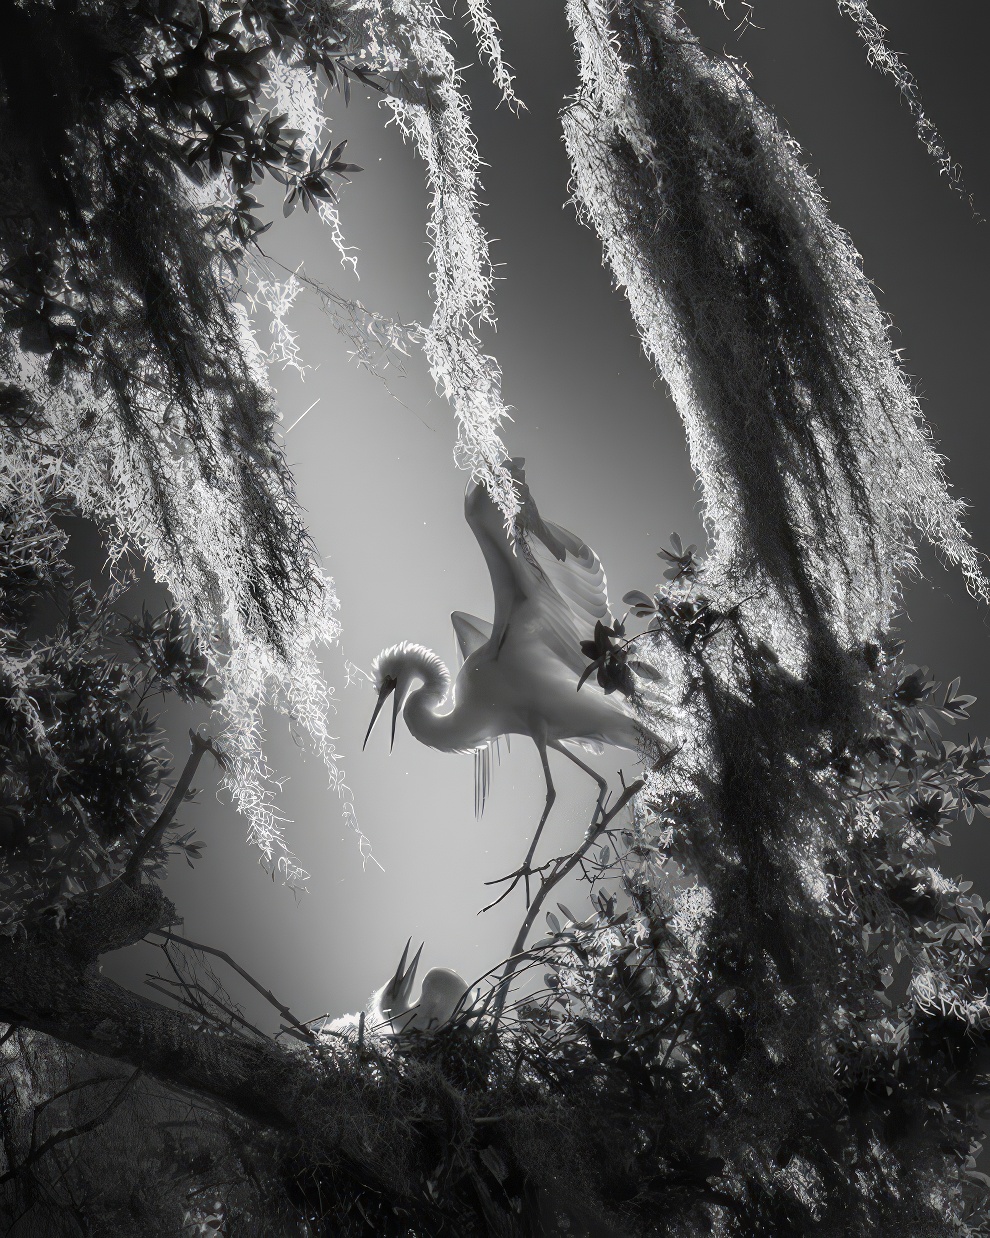 Black and White Nature Photography Award 03 